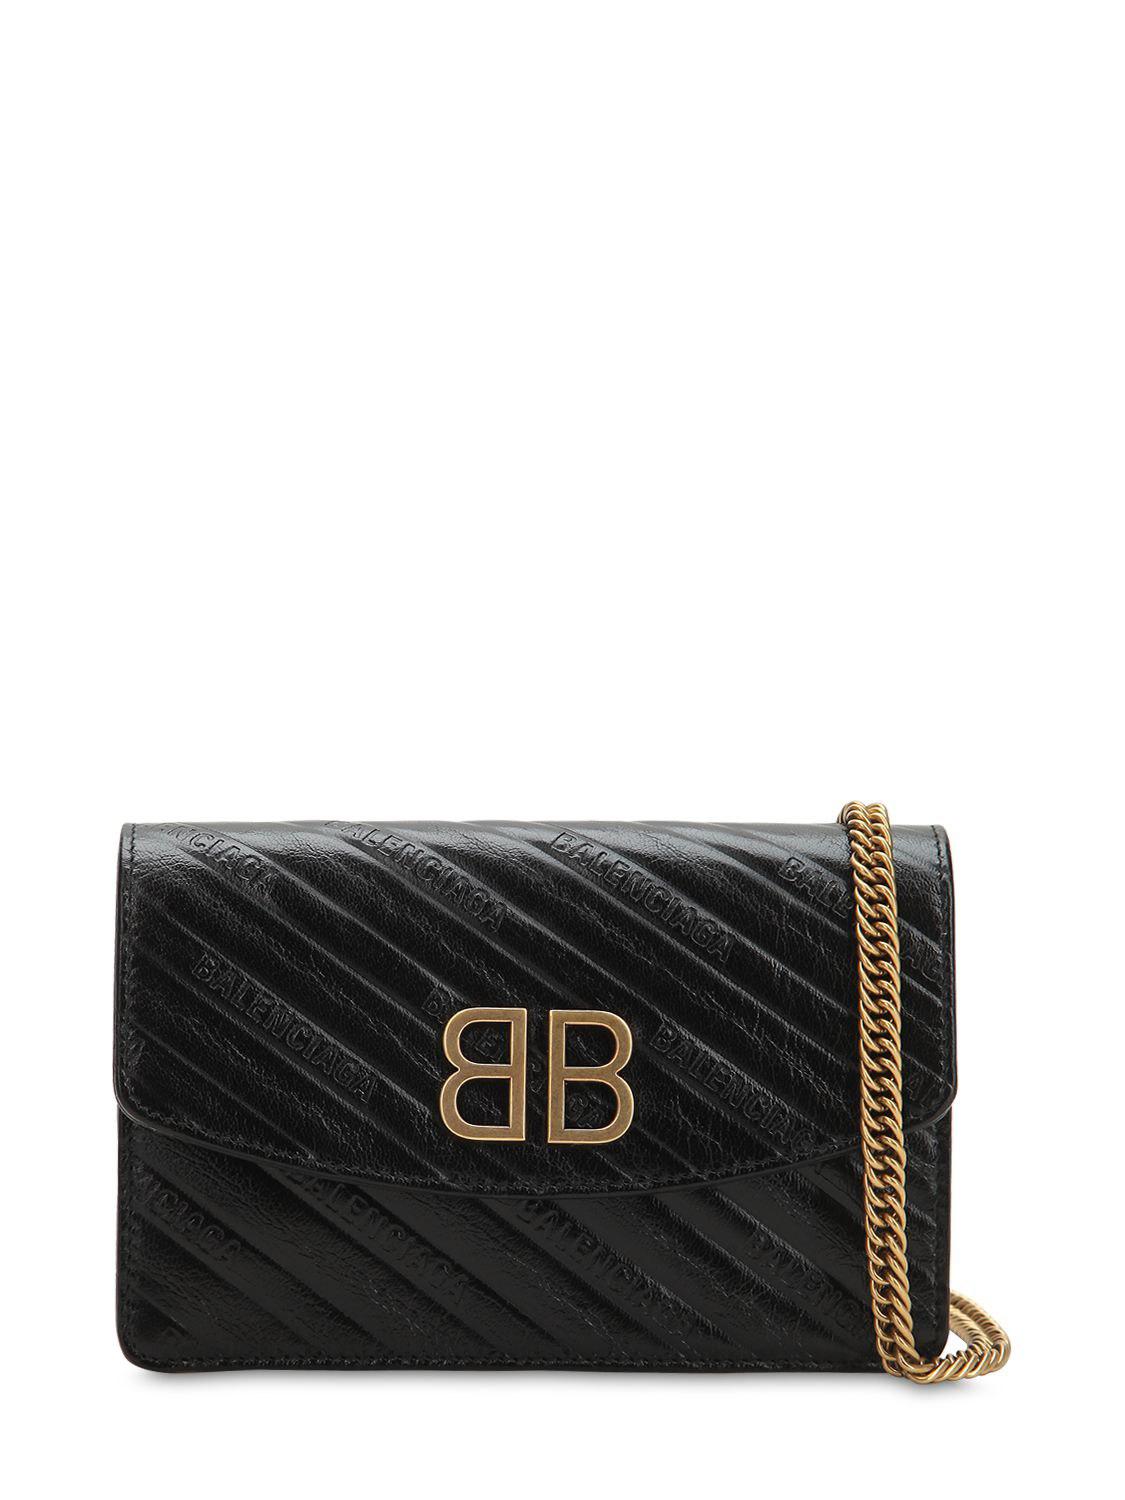 Balenciaga Bb Chain Wallet Leather Bag in Black | Lyst